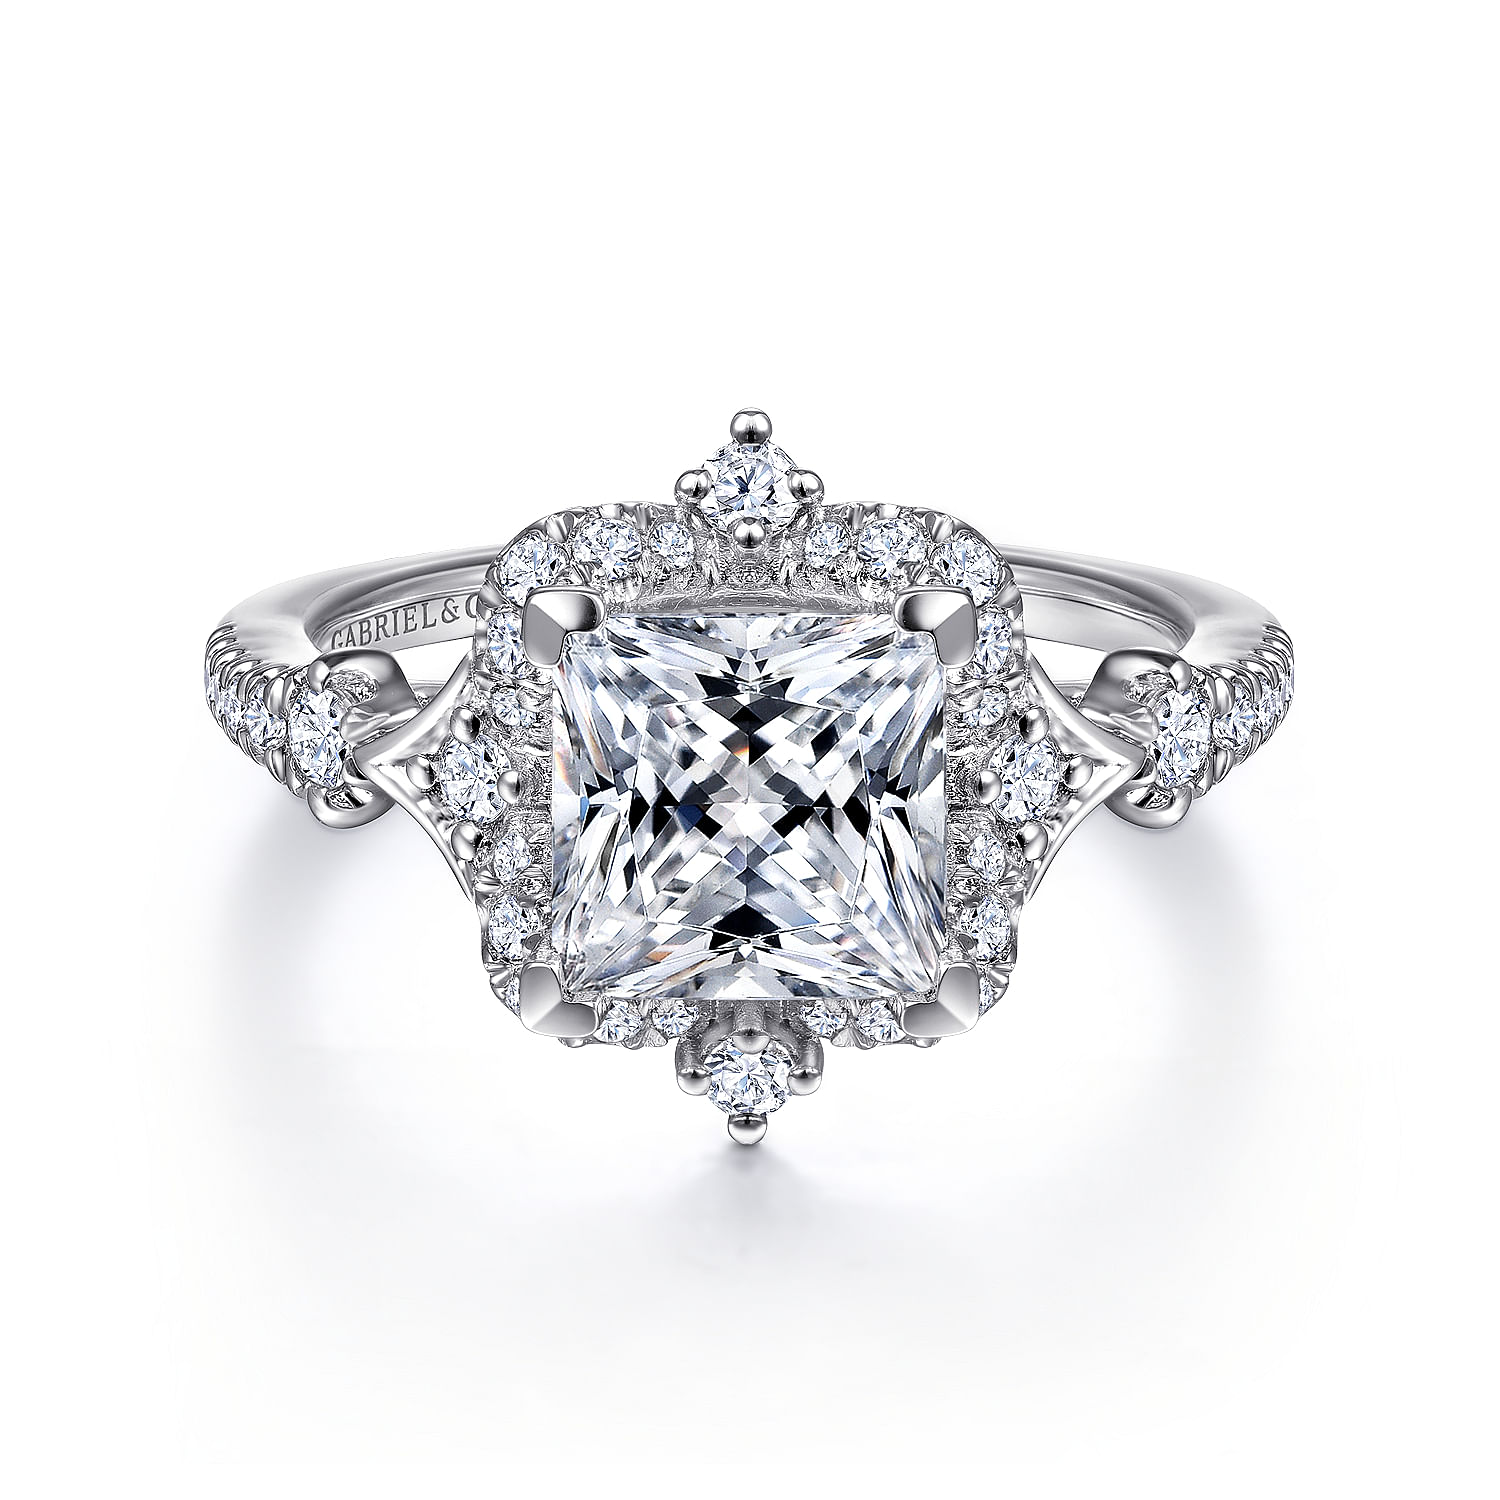 Gabriel - Unique 14K White Gold Vintage Inspired Princess Cut Halo Diamond Engagement Ring